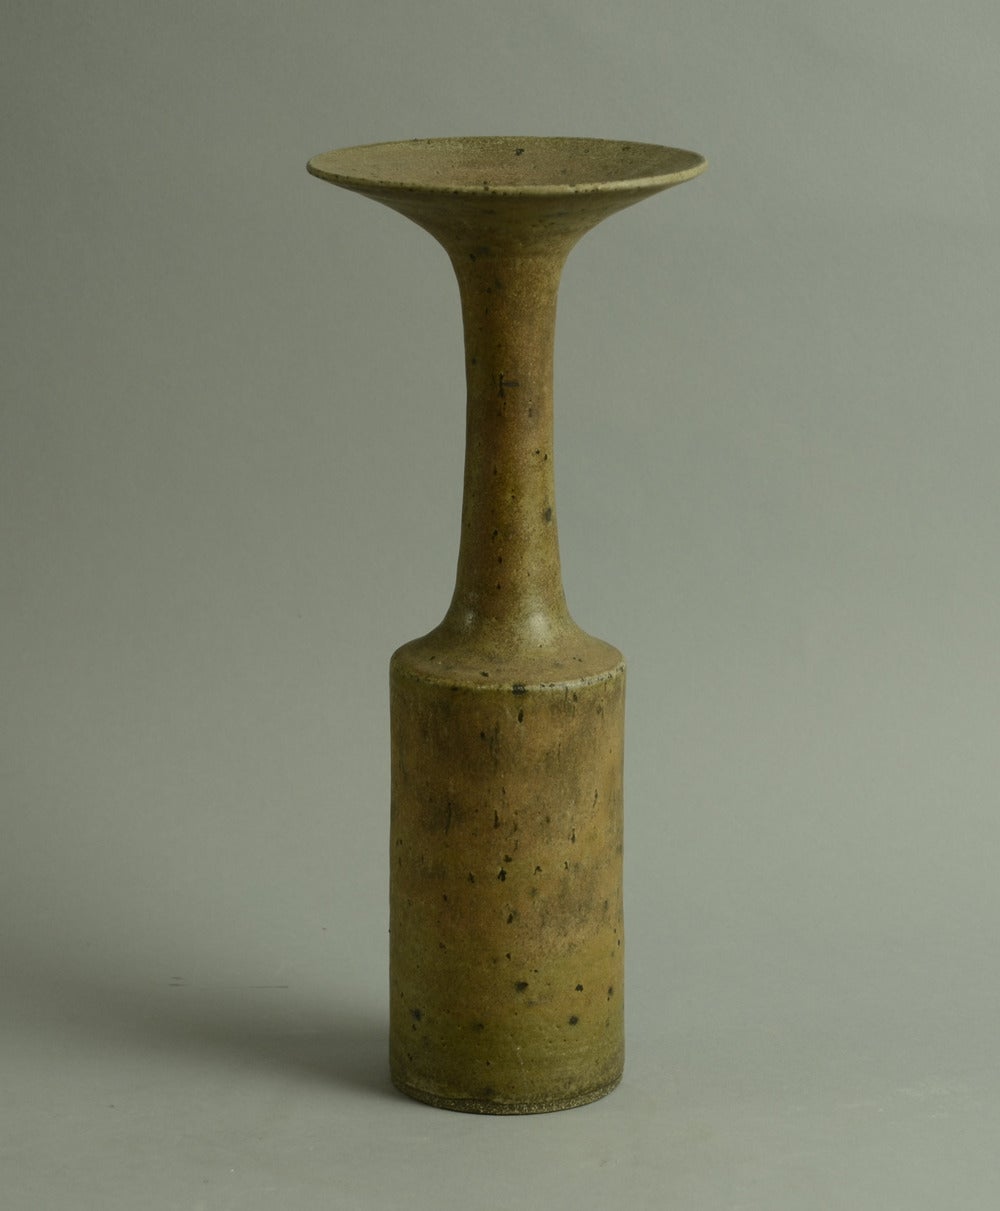 Unique stoneware vase with flaring rim and matte brown glaze.